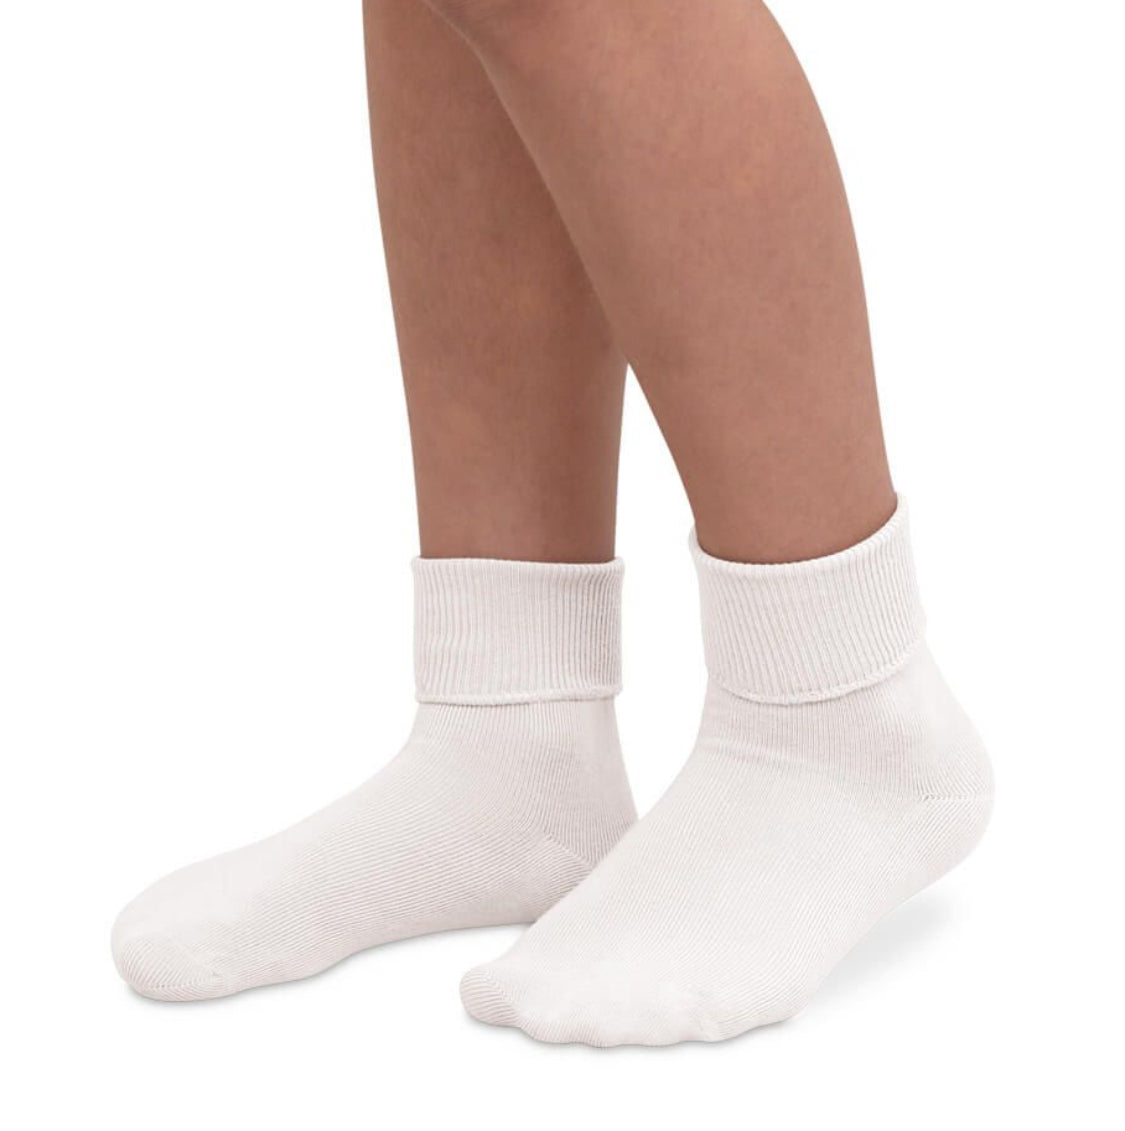 white turn cuff smooth toe socks one pair